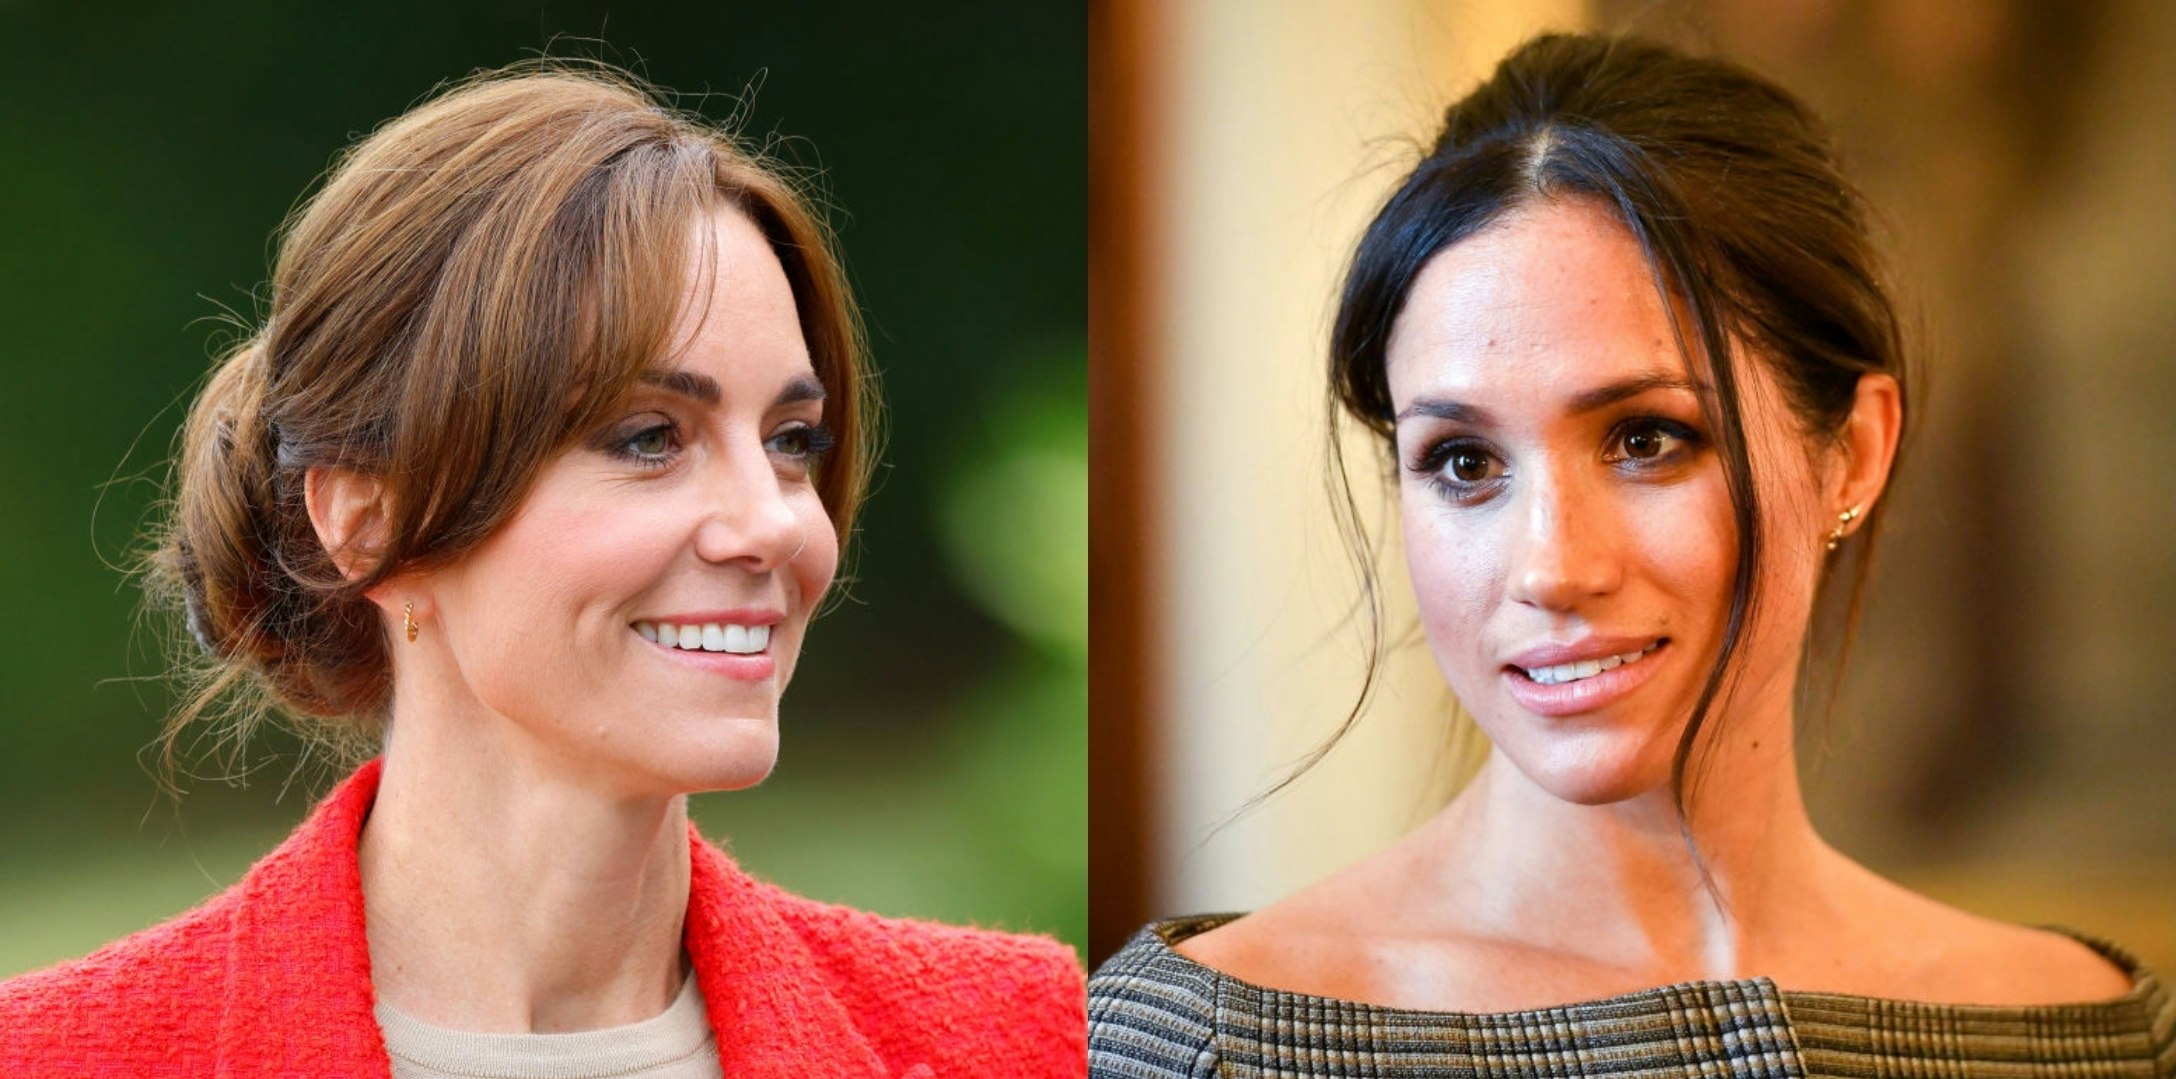 Meghan Markle vs Kate Middleton: Royal fashion face off